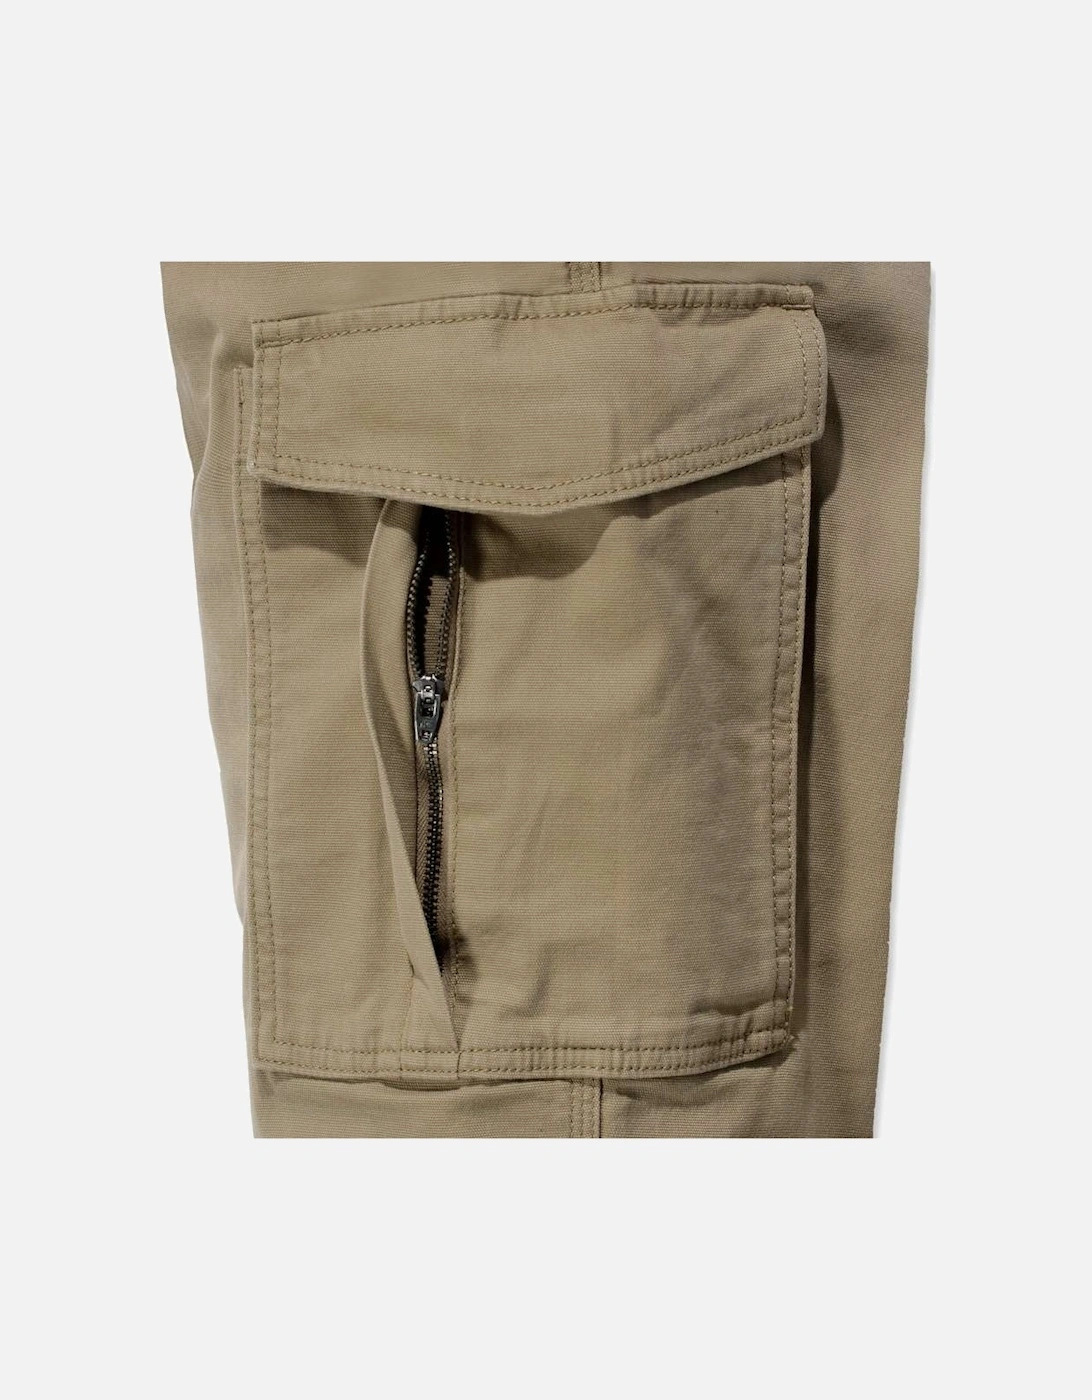 Carhartt Mens Rugged Flex Rigby Durable Cargo Pants Trousers